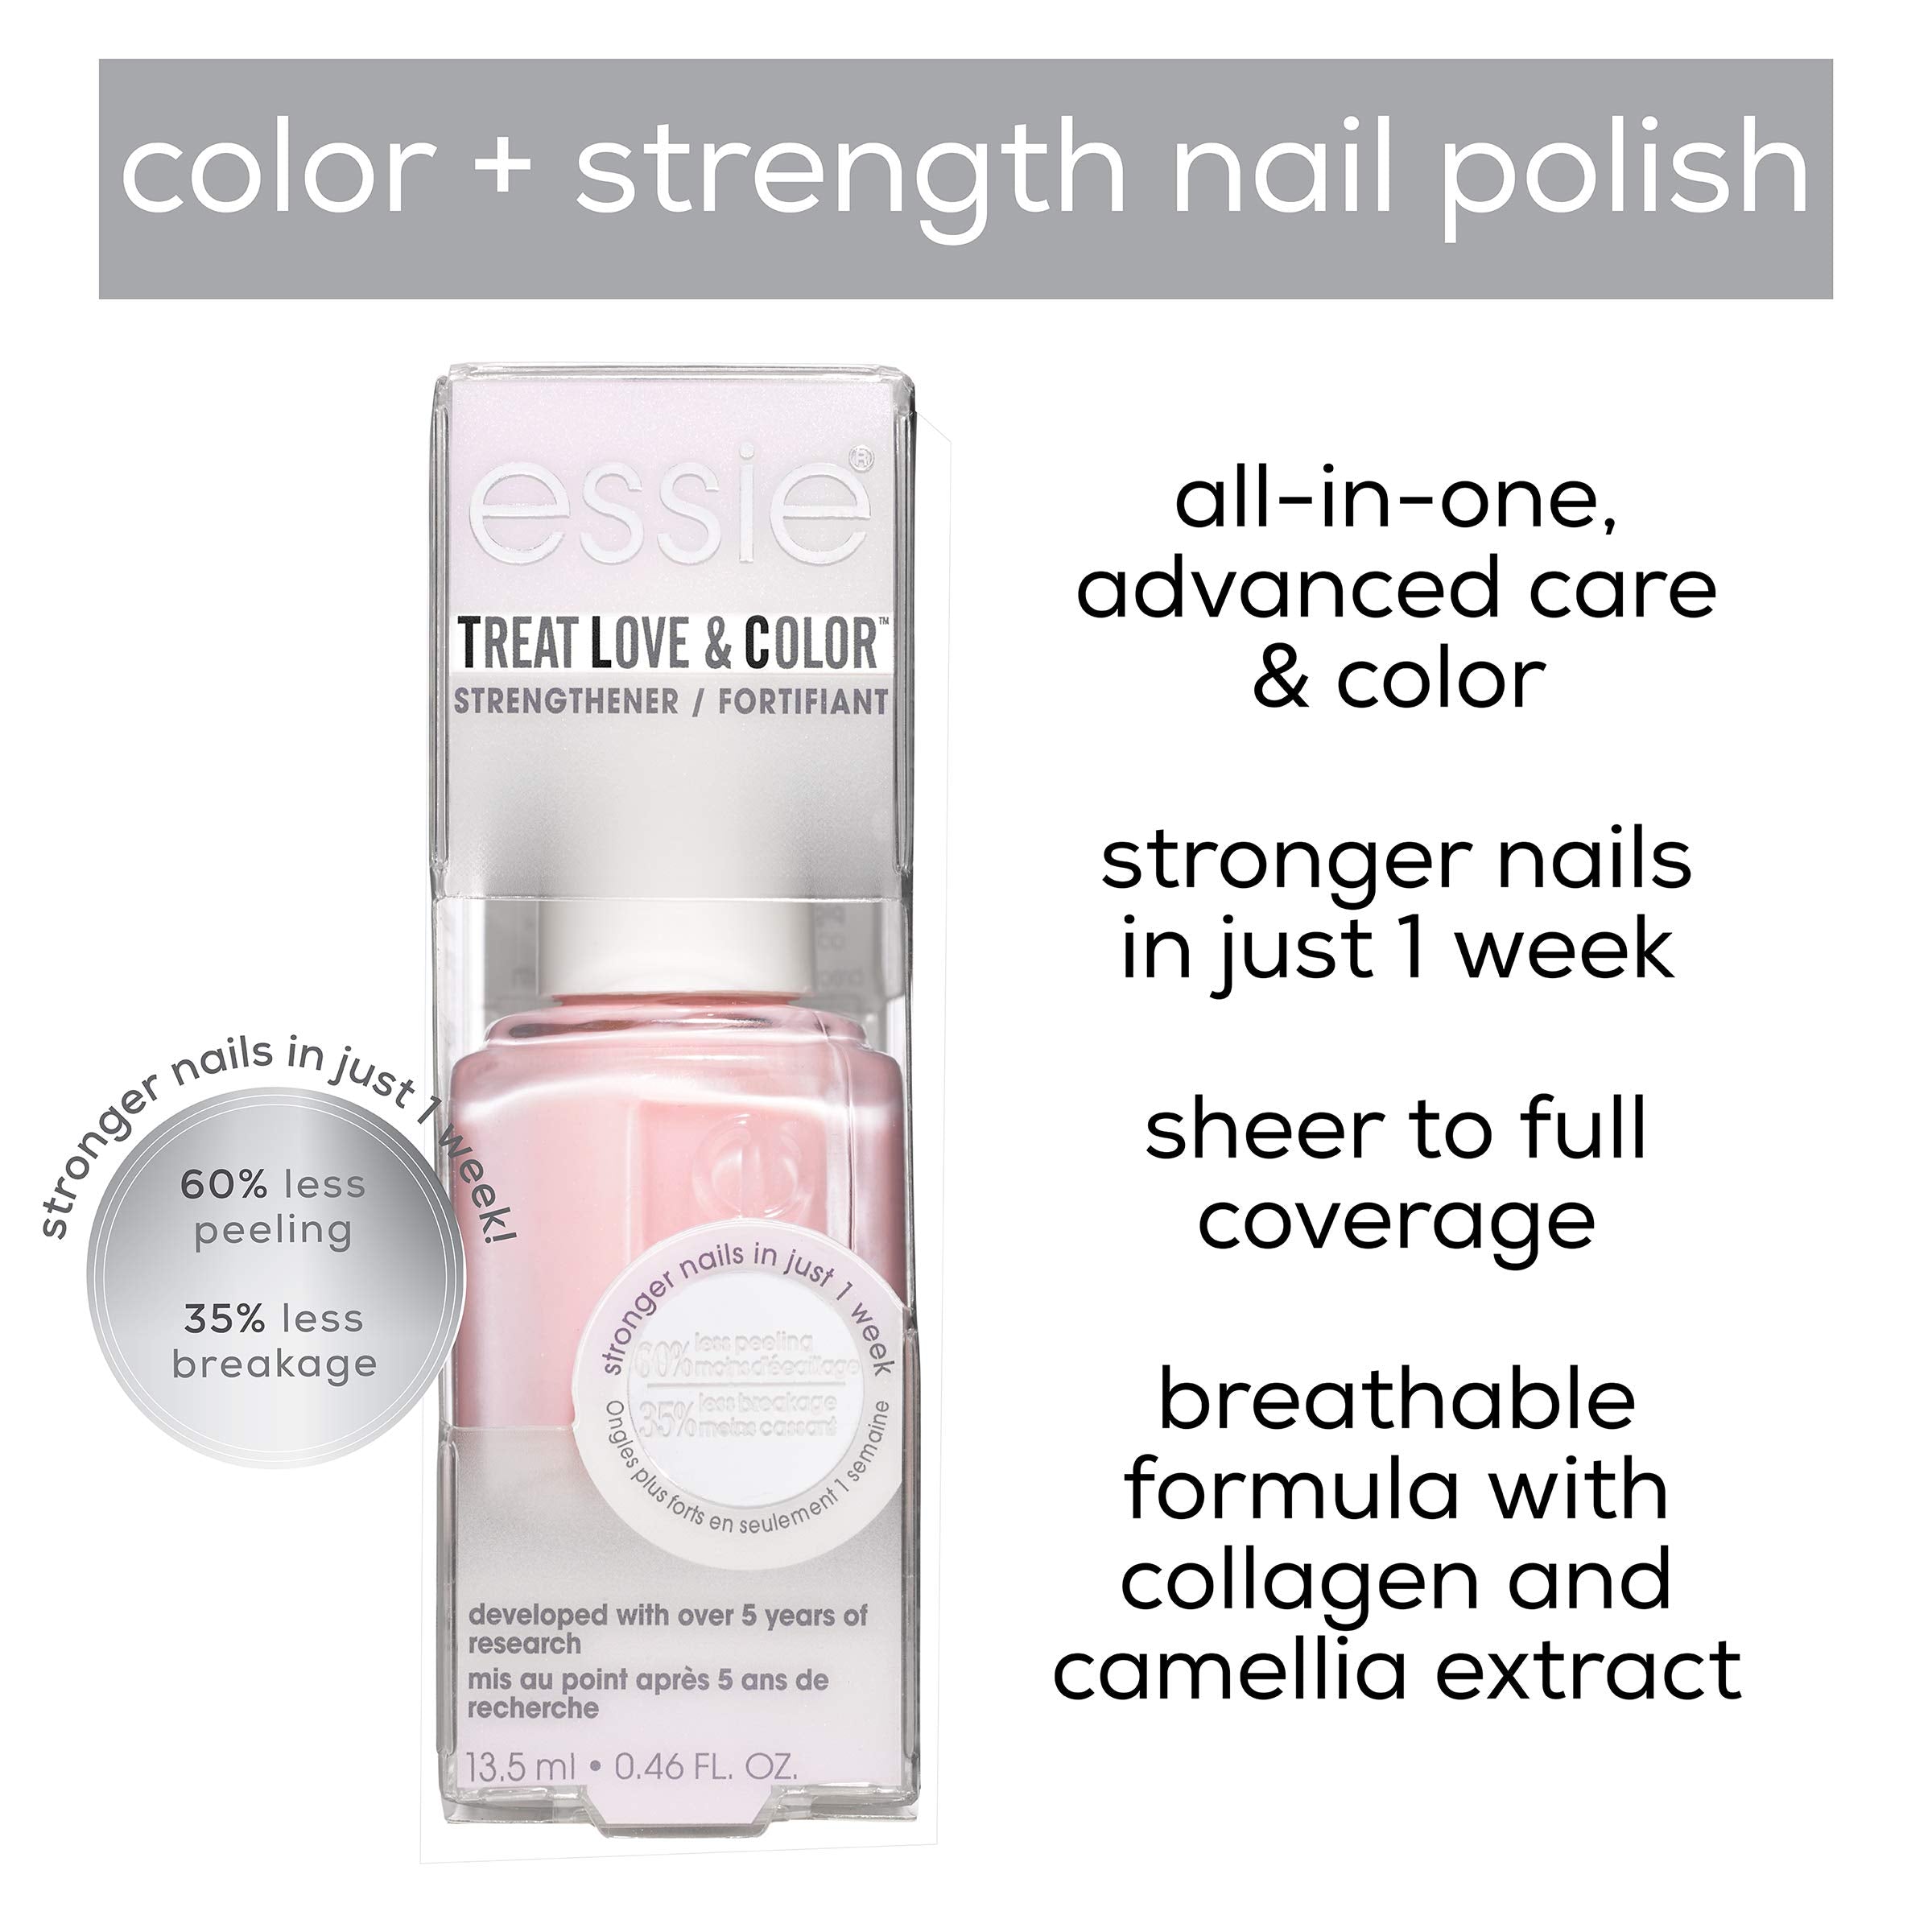 ESSIE Treat Love & Color Strengthener Nail Polish